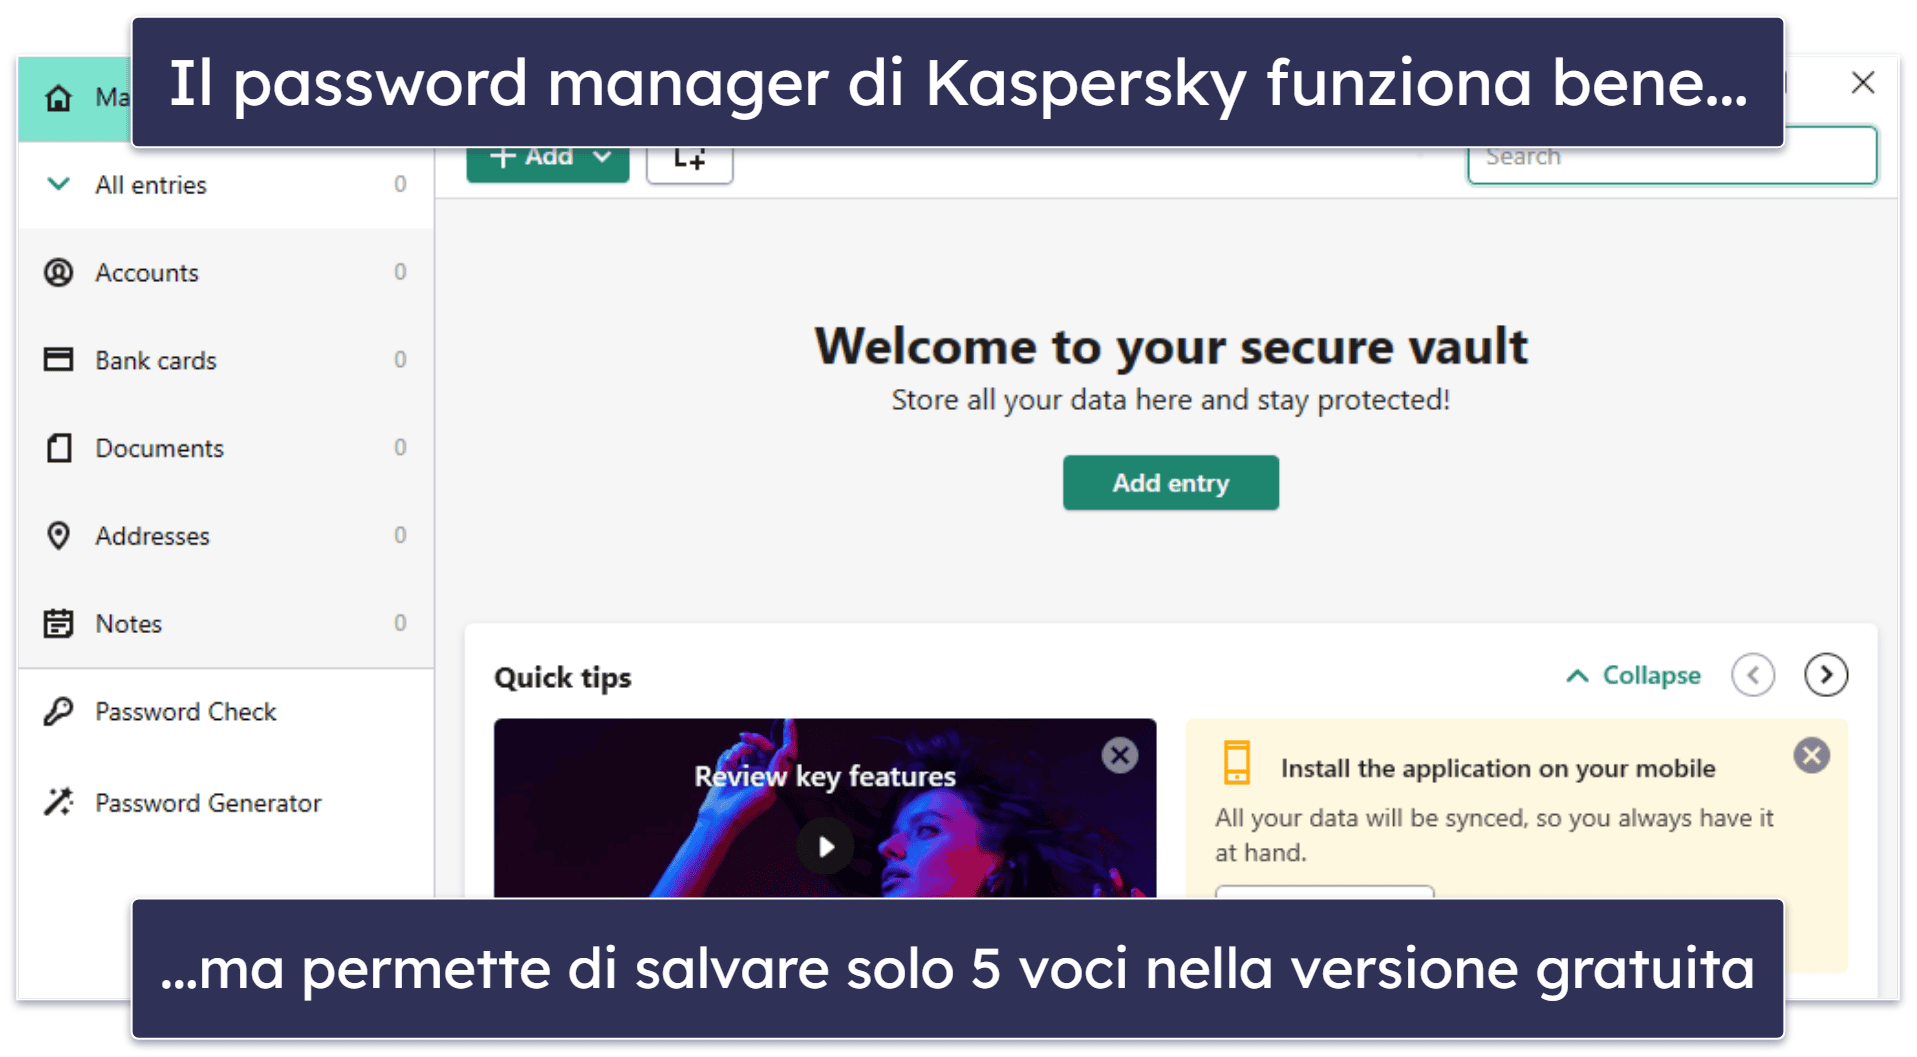 6. Kaspersky Free – Una buona dotazione di funzioni gratis